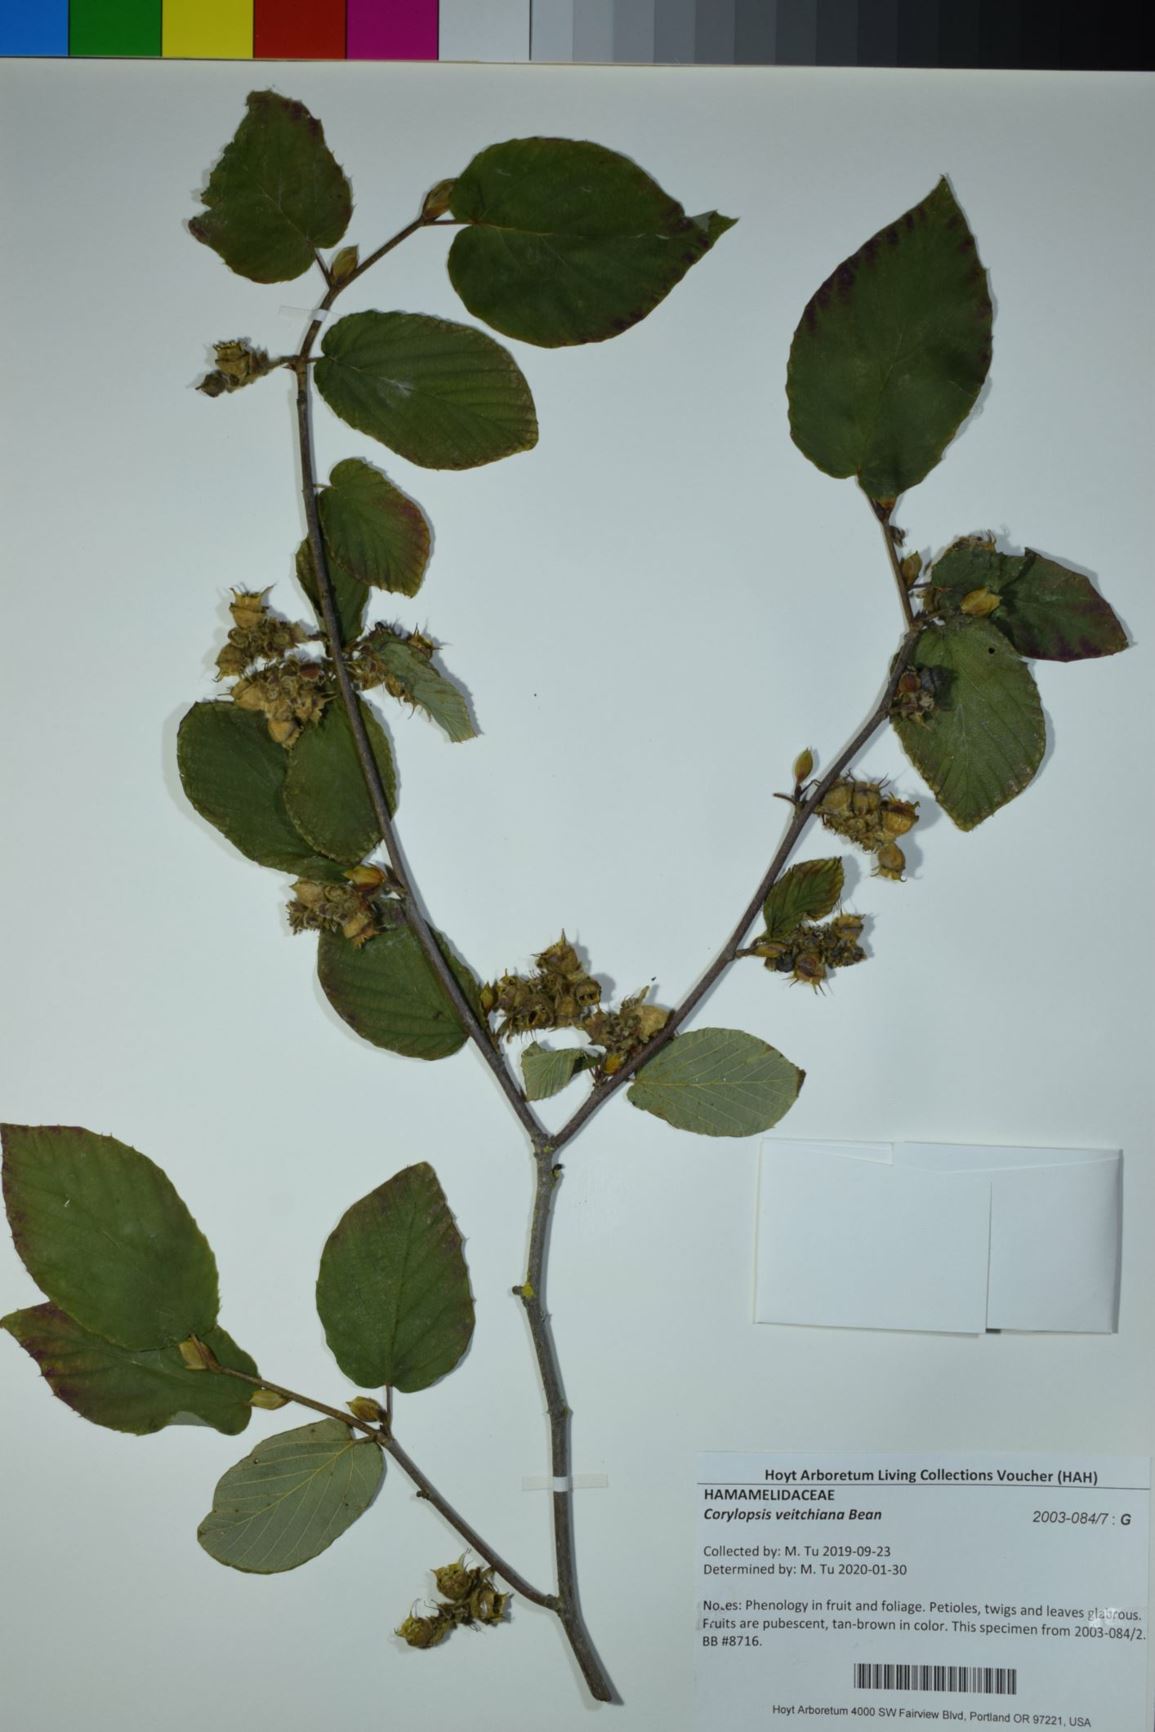 Corylopsis veitchiana